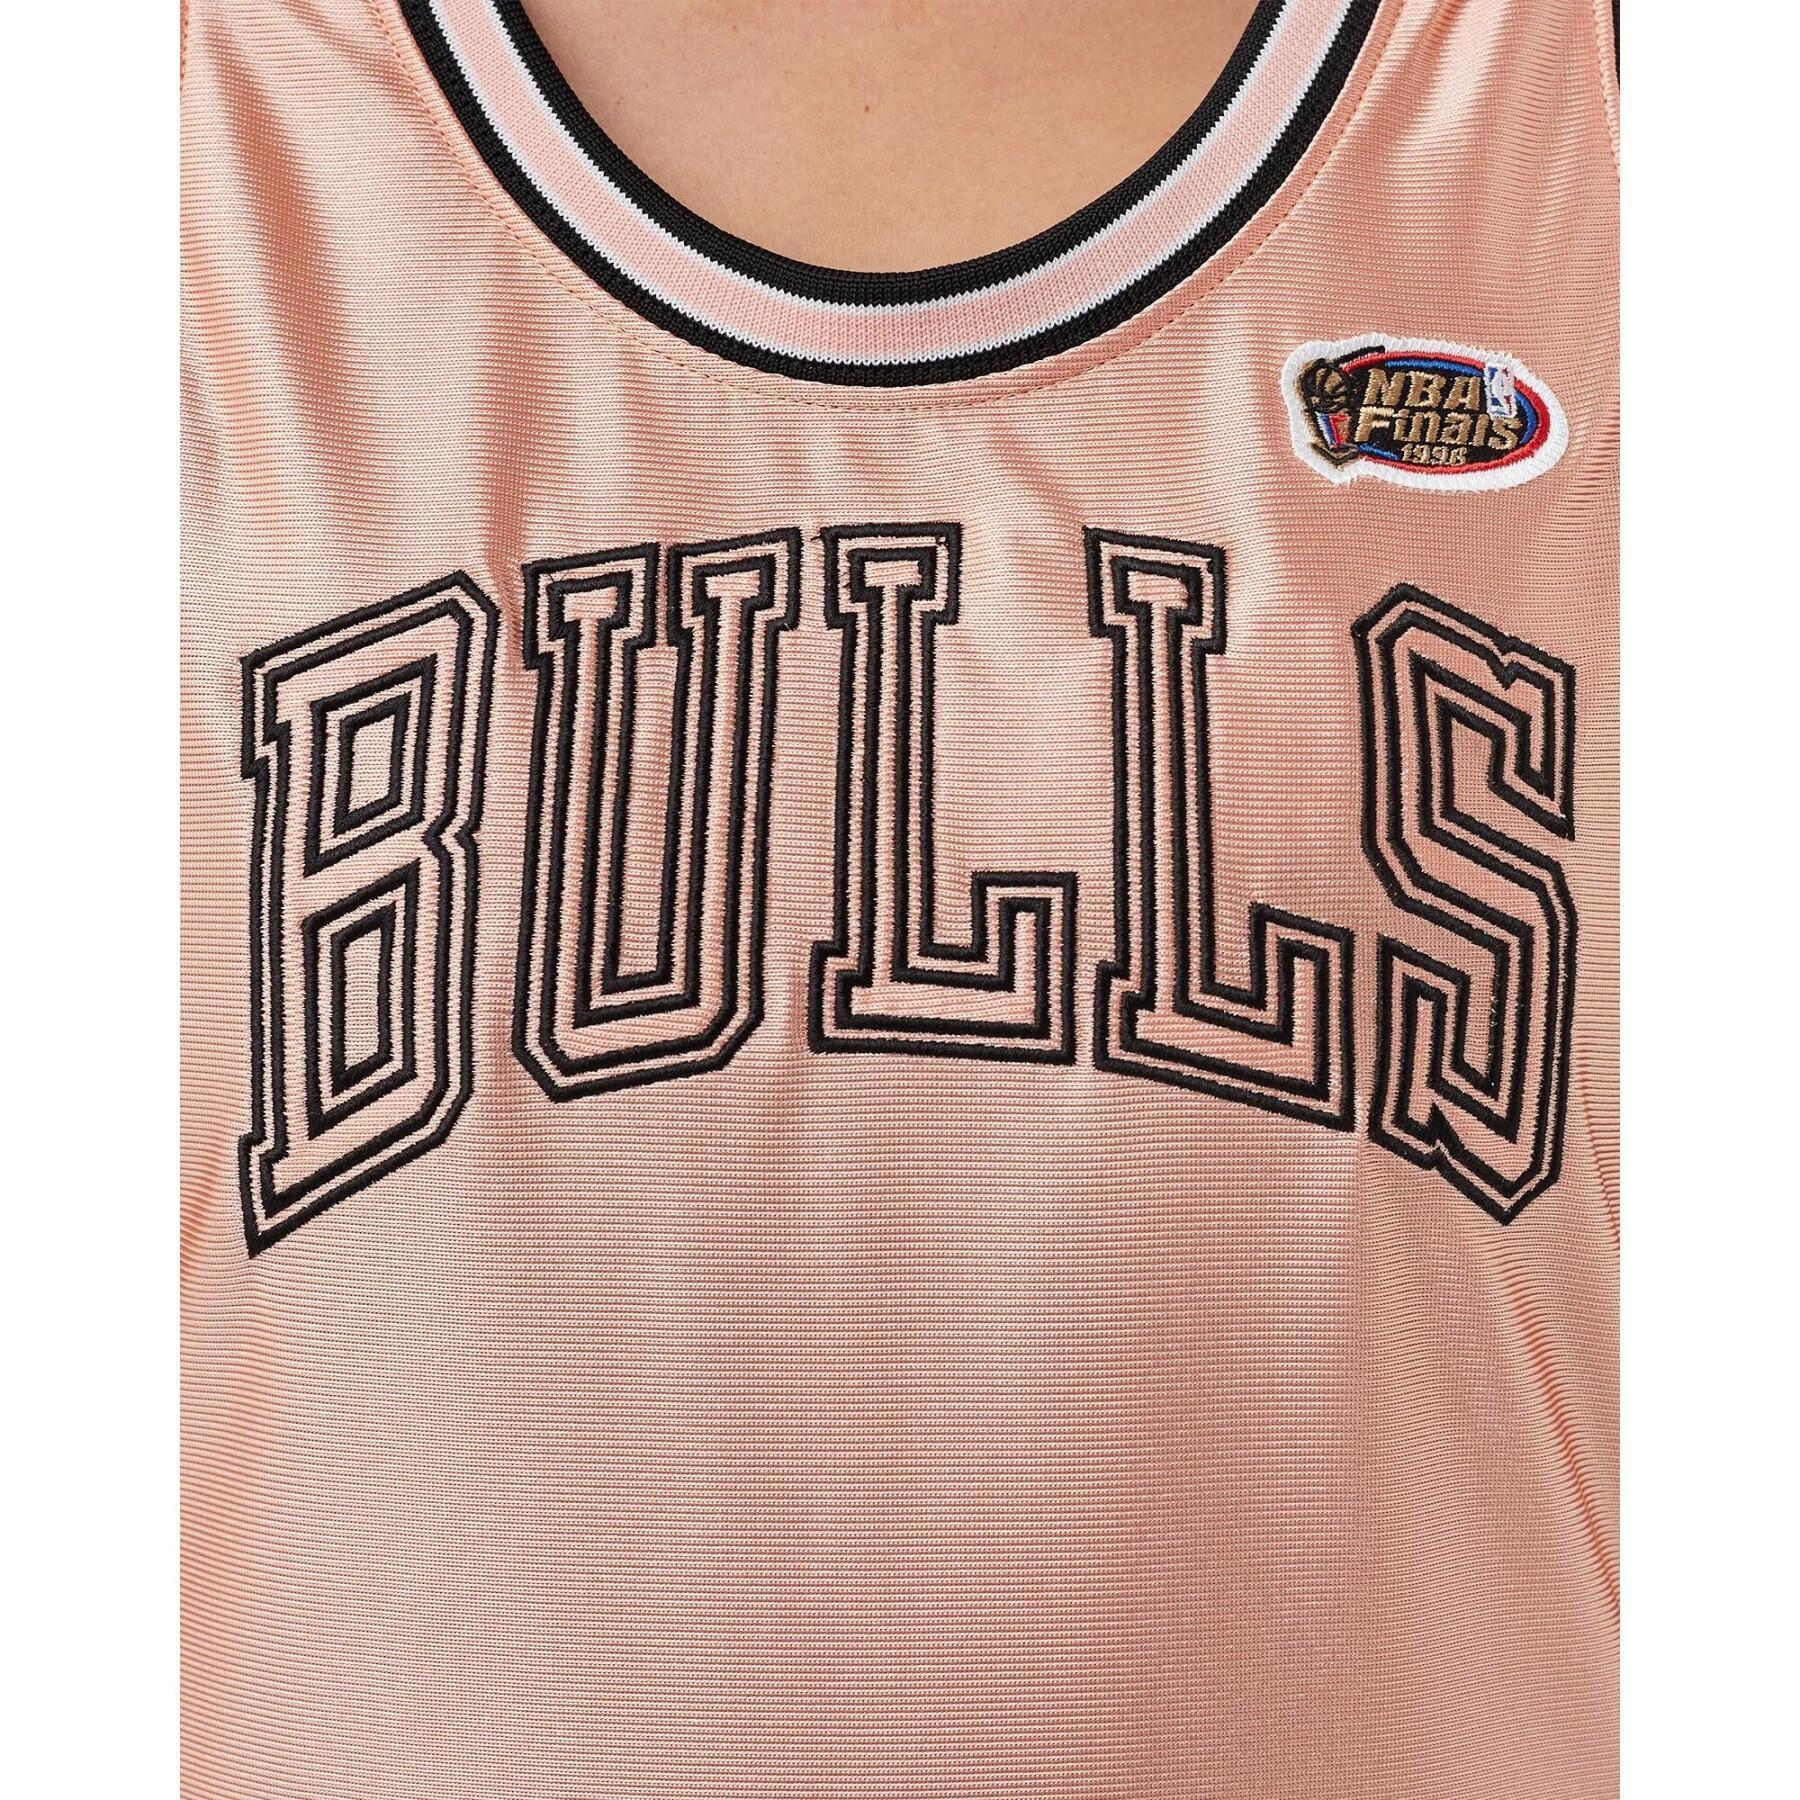 Women's jersey Chicago Bulls dazzle